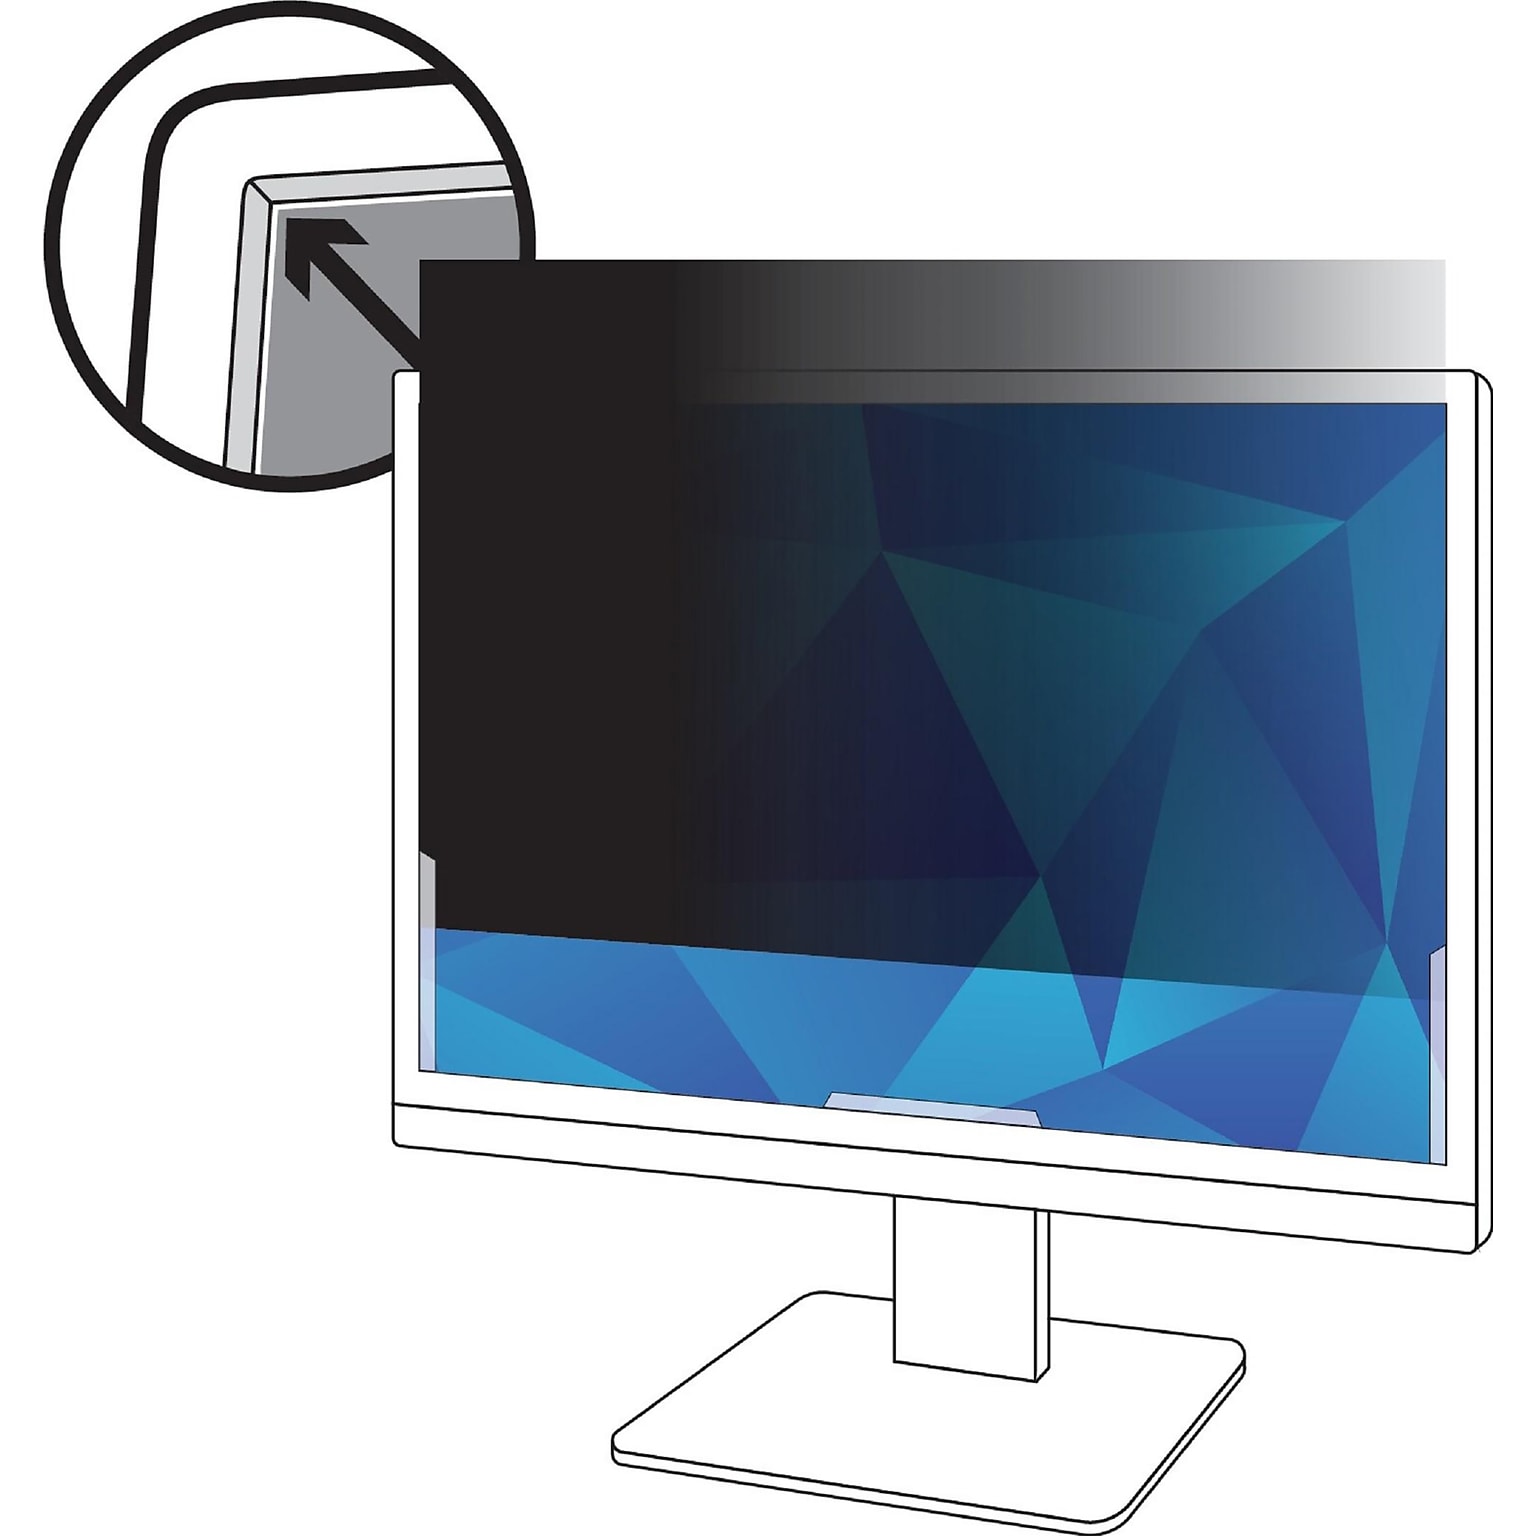 3M Anti-Glare Filter for 27 Widescreen Monitor, 16:9 Aspect Ratio (AG270W9B)